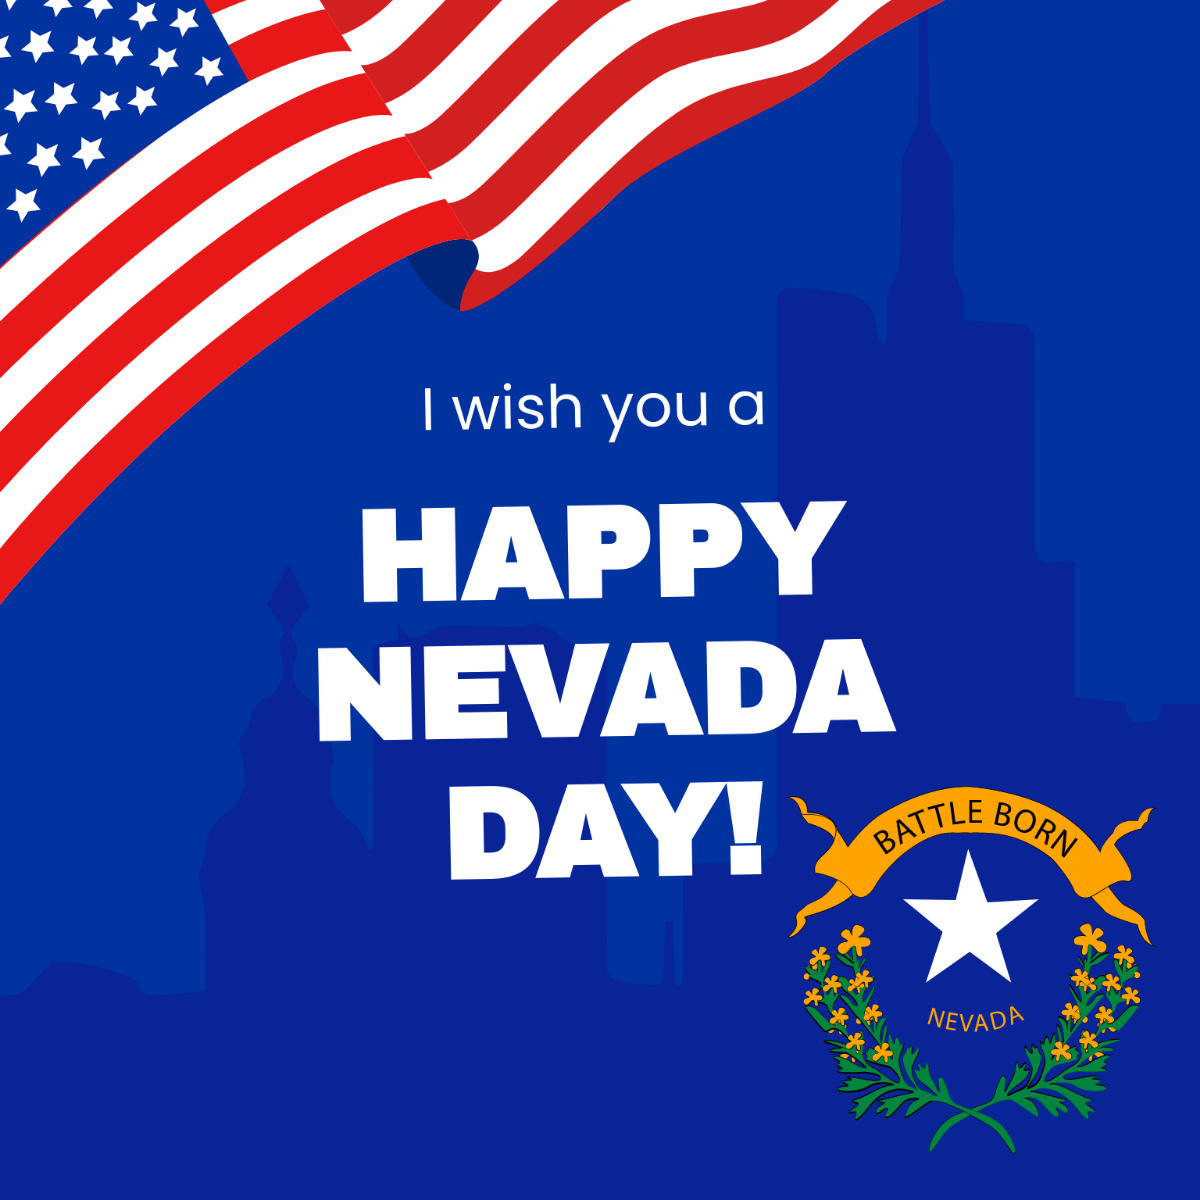 Nevada Day Greeting Card Vector